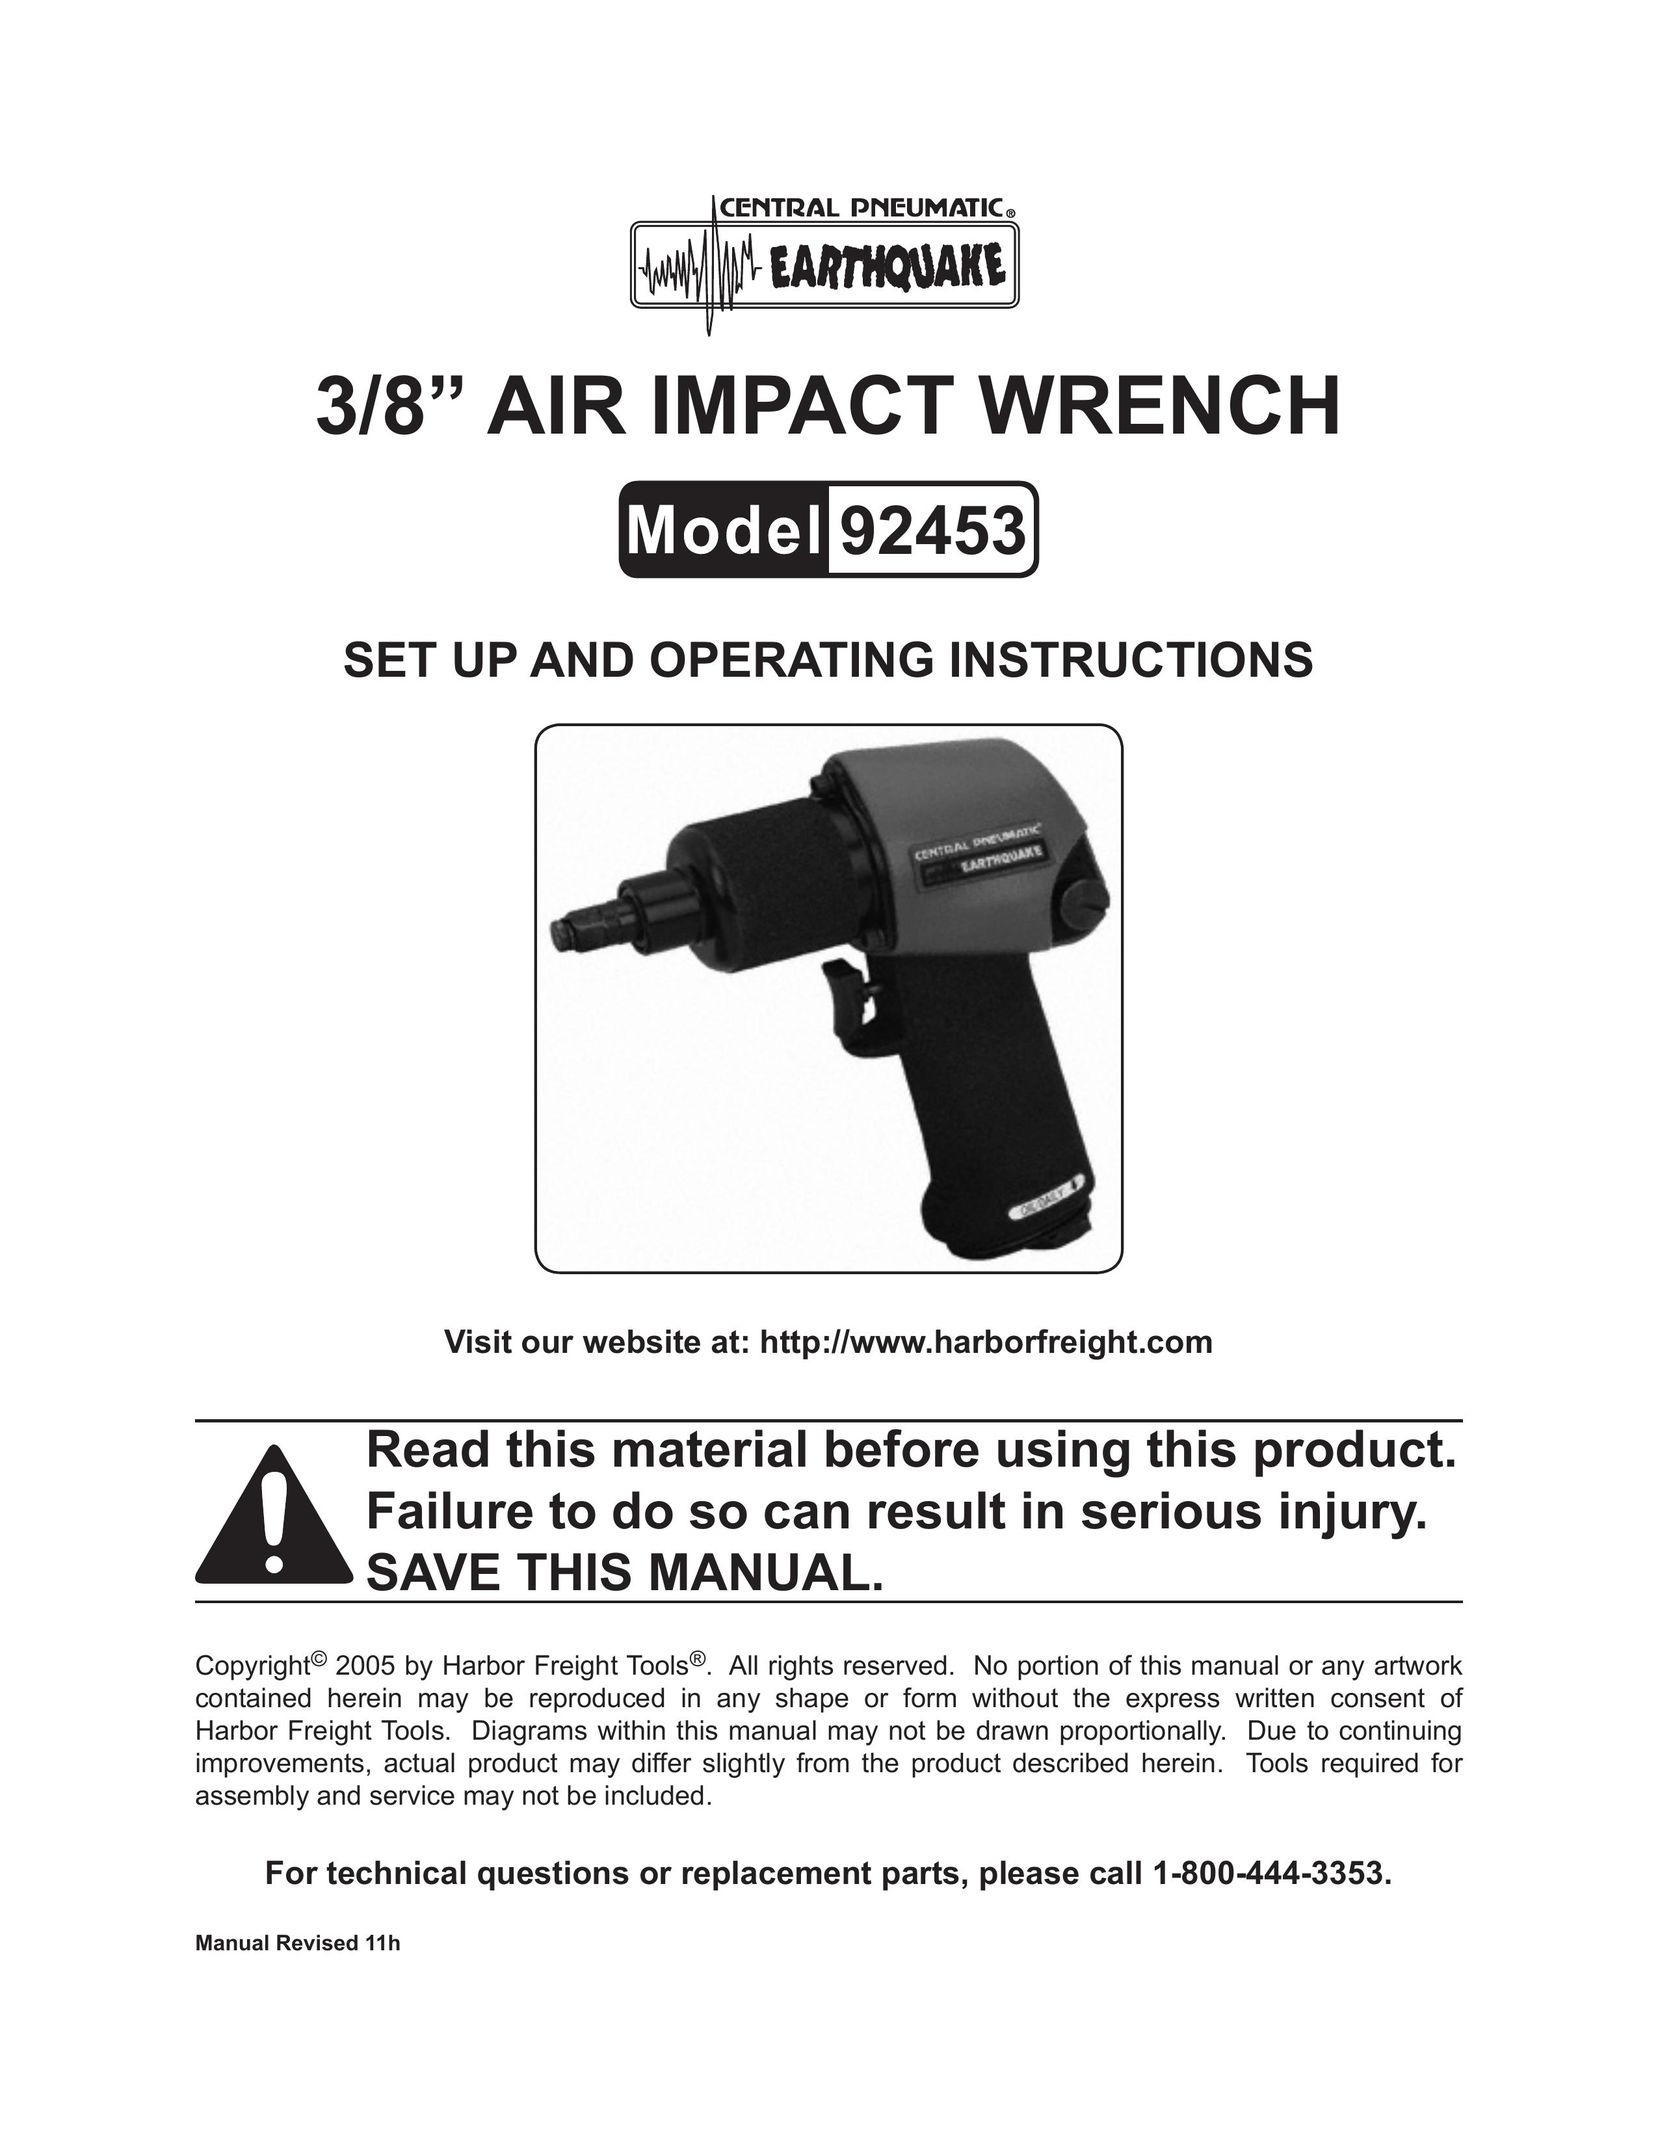 Earthquake Sound 92453 Impact Driver User Manual